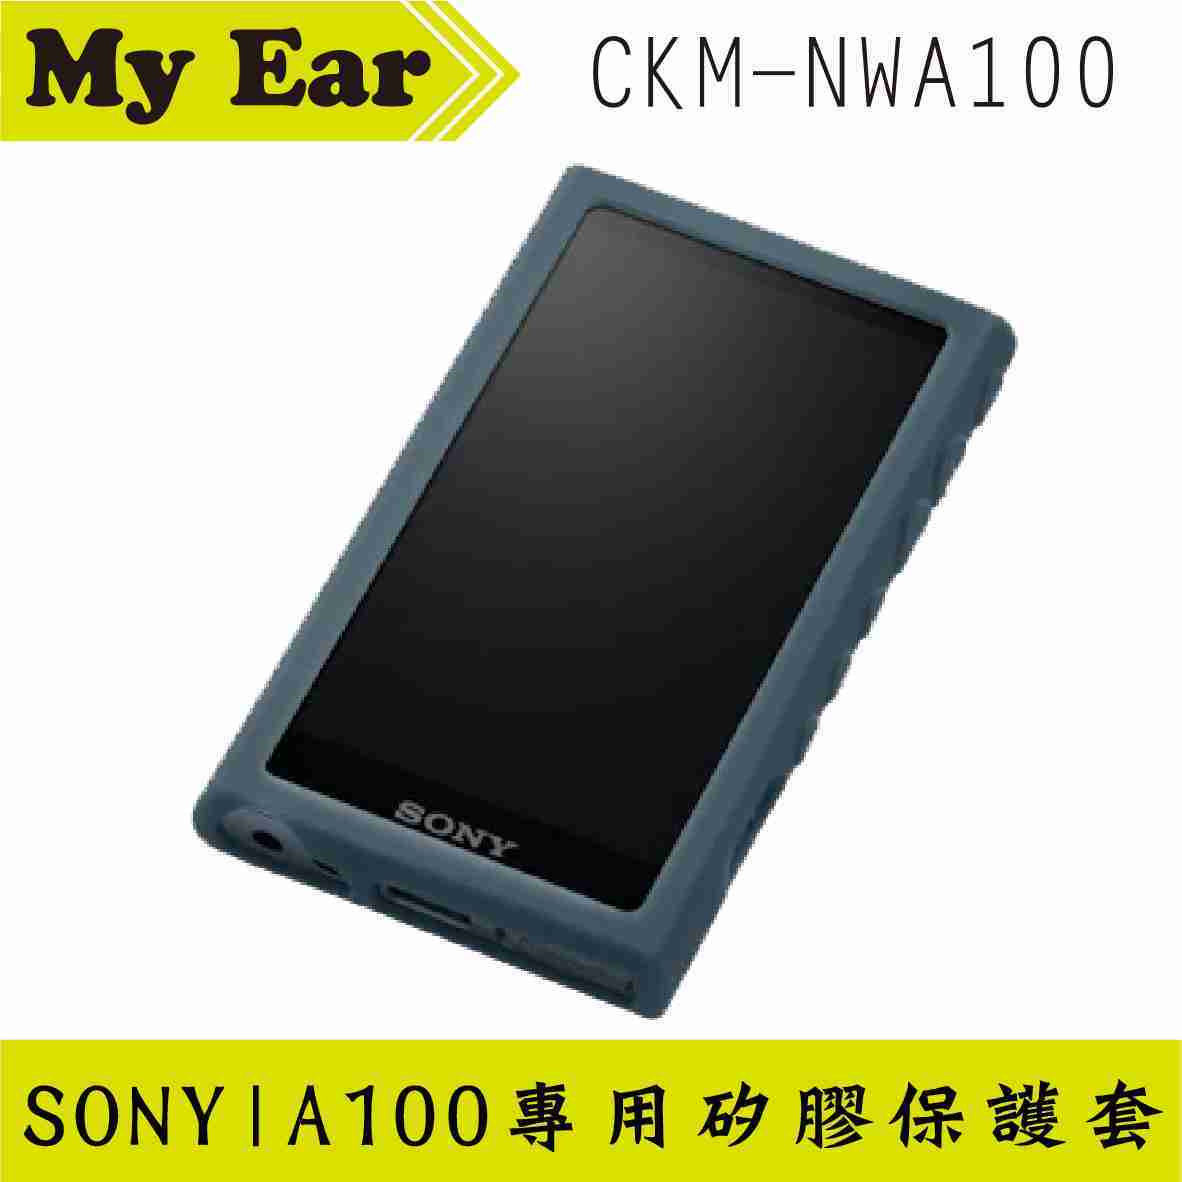 SONY 索尼 CKM-NWA100 藍色 Walkman® 專用矽膠保護殼 | My Ear 耳機專門店